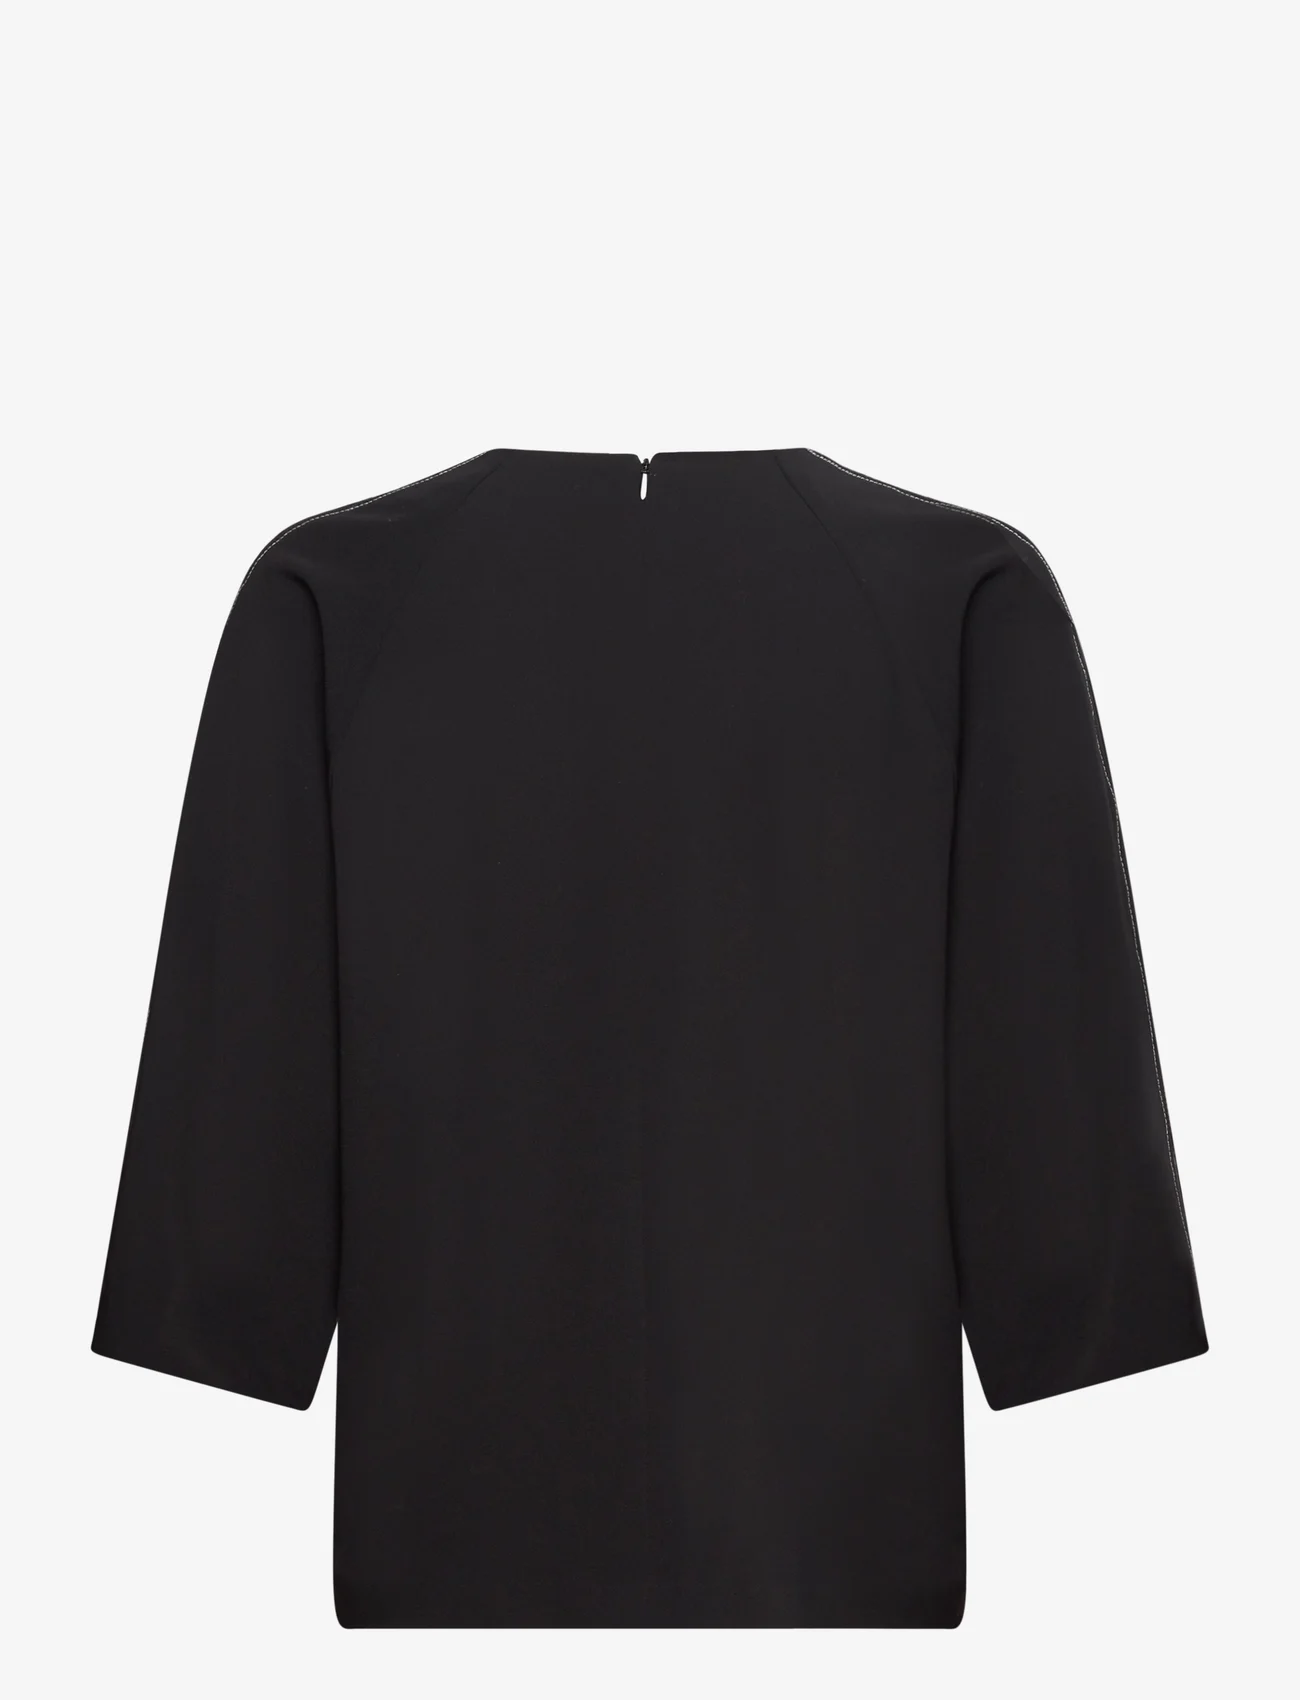 InWear - ZadianIW Sweatshirt - long-sleeved tops - black - 1